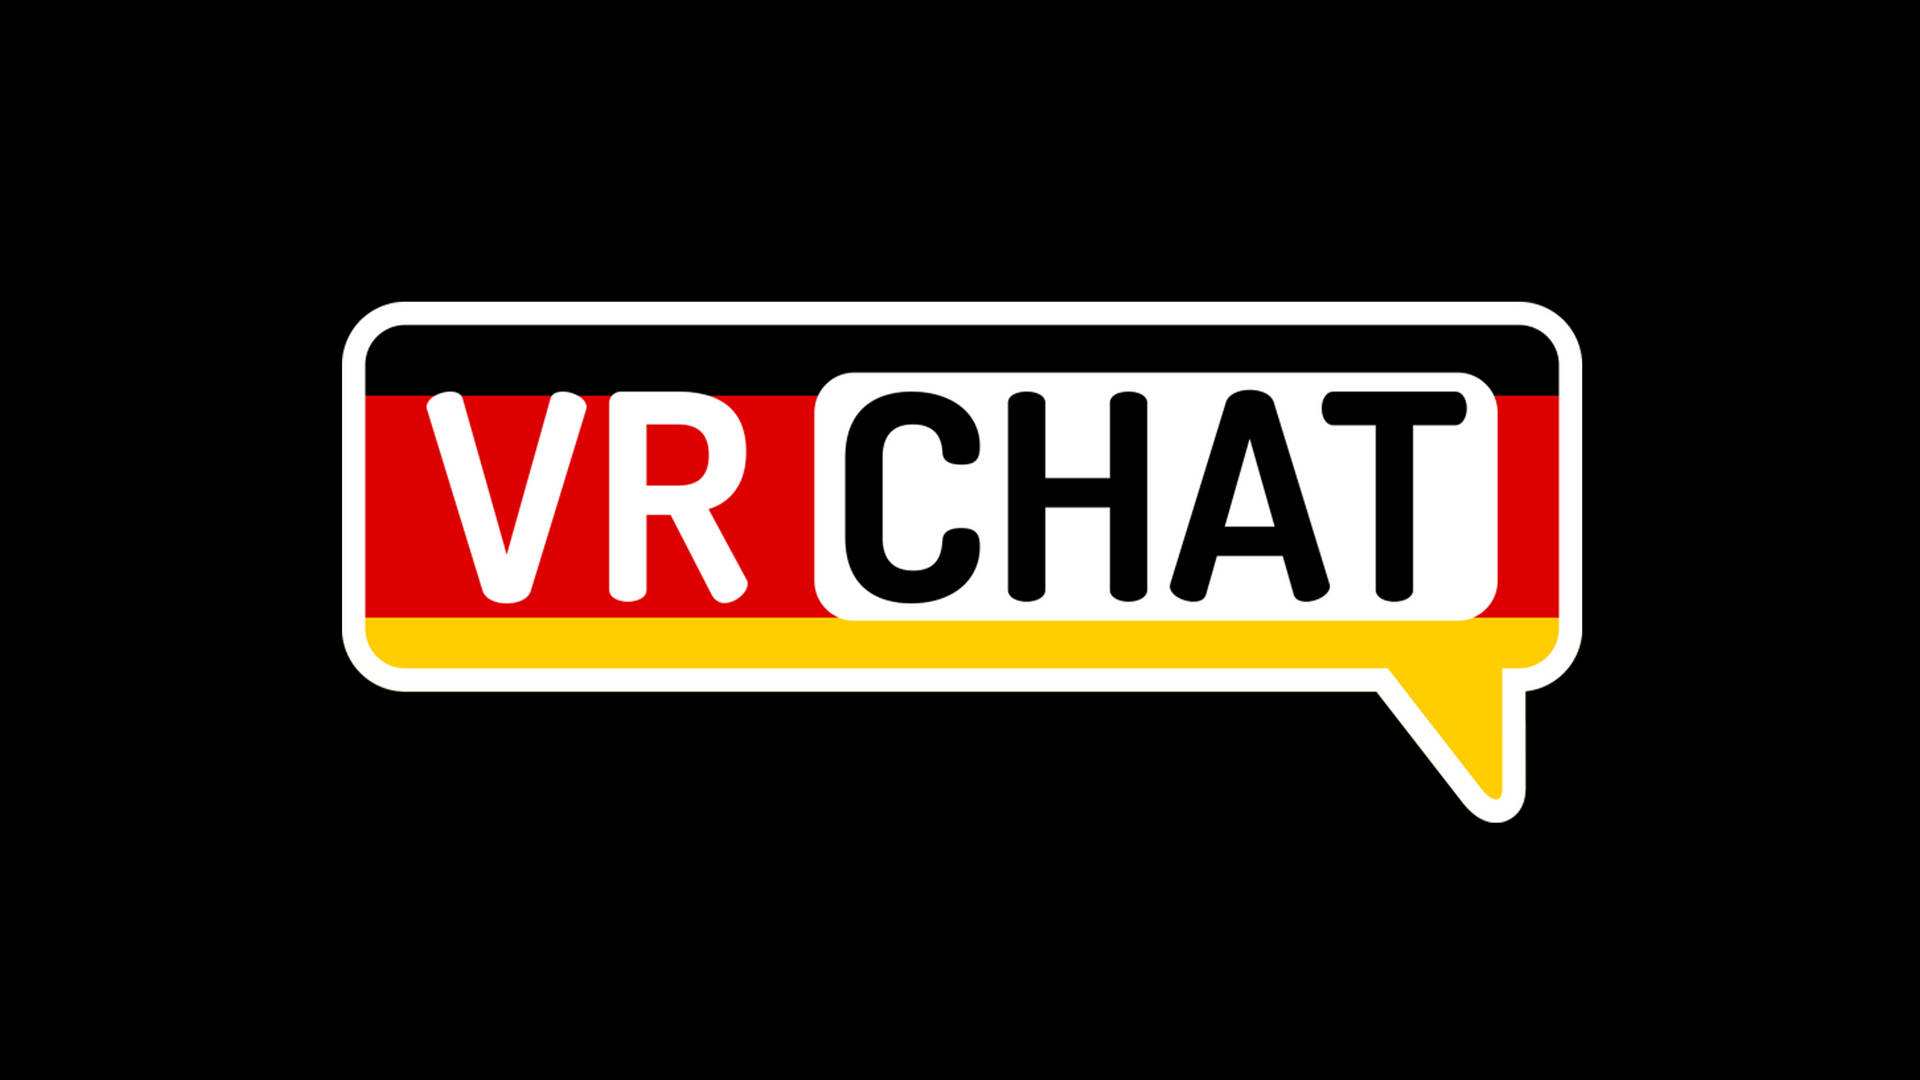 Vrchat Logo Illustration